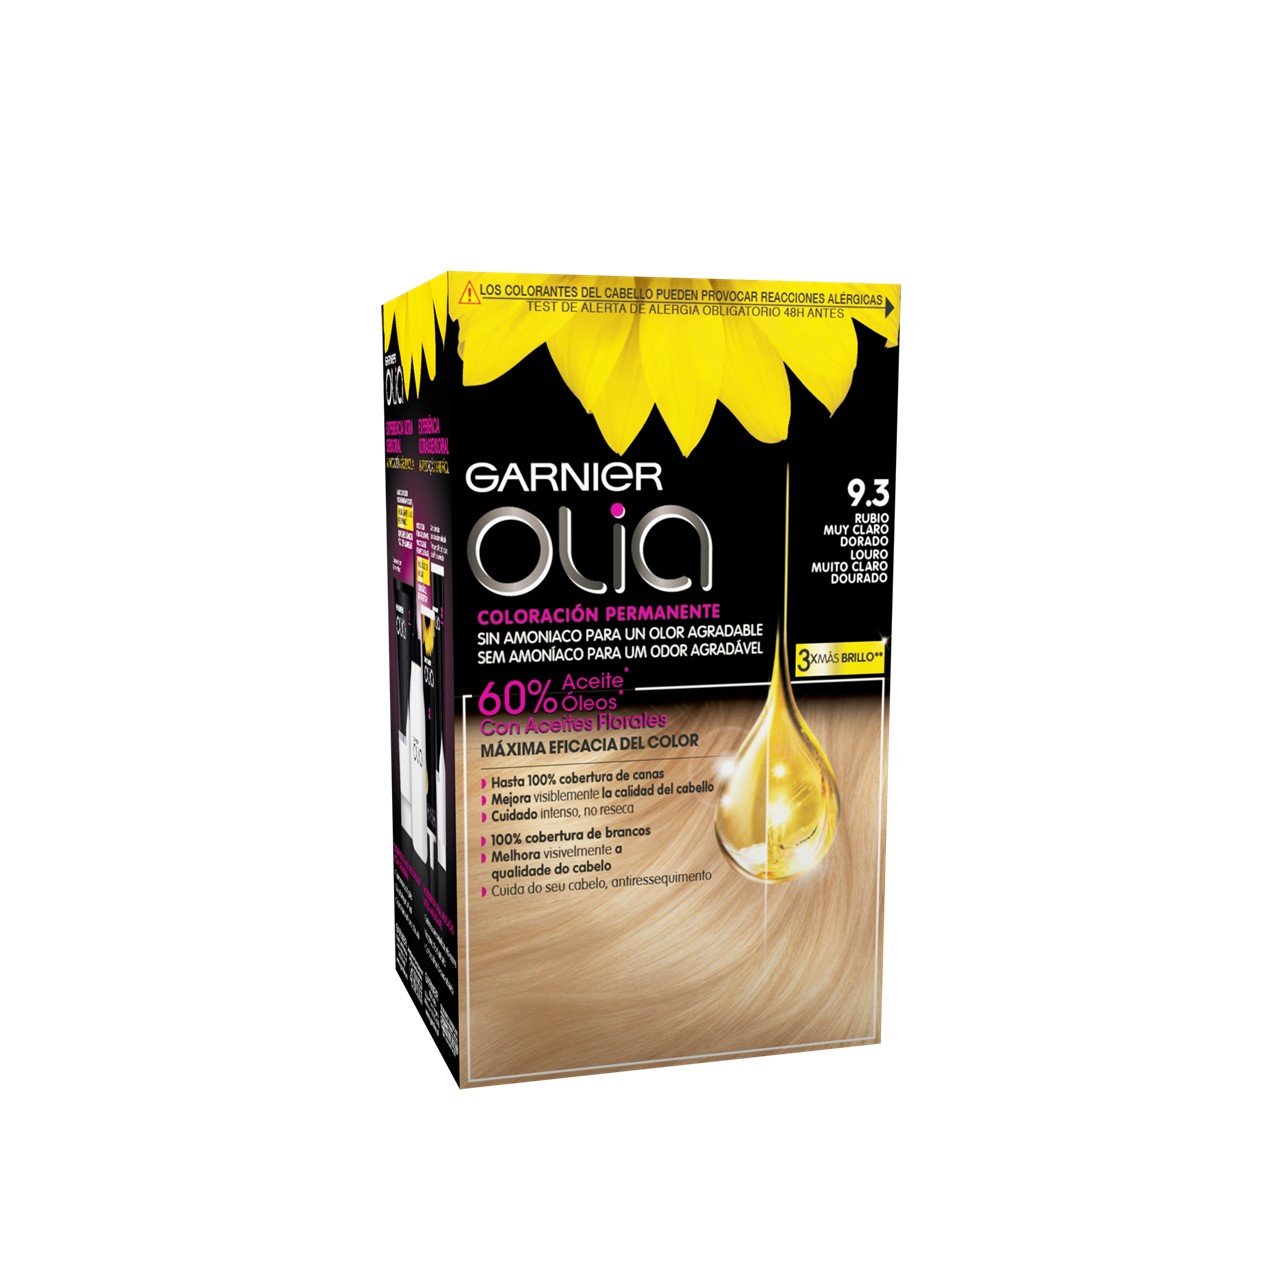 Garnier Olia 9.3 Permanent Hair Dye